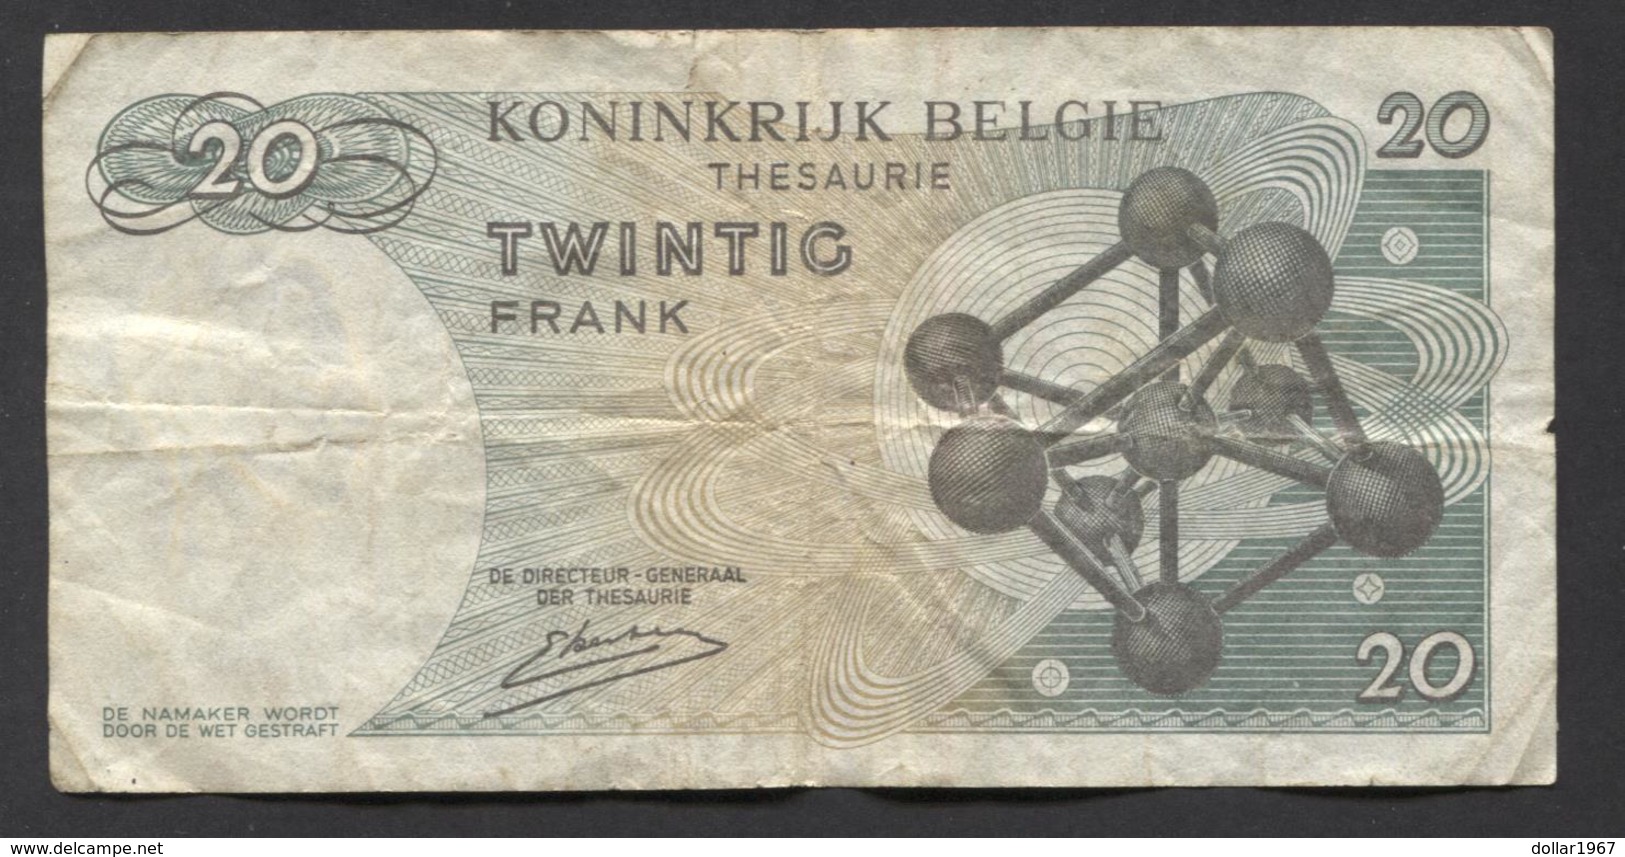 België Belgique Belgium 15 06 1964 -  20 Francs Atomium Baudouin. 3 U 1342567 - 20 Francs